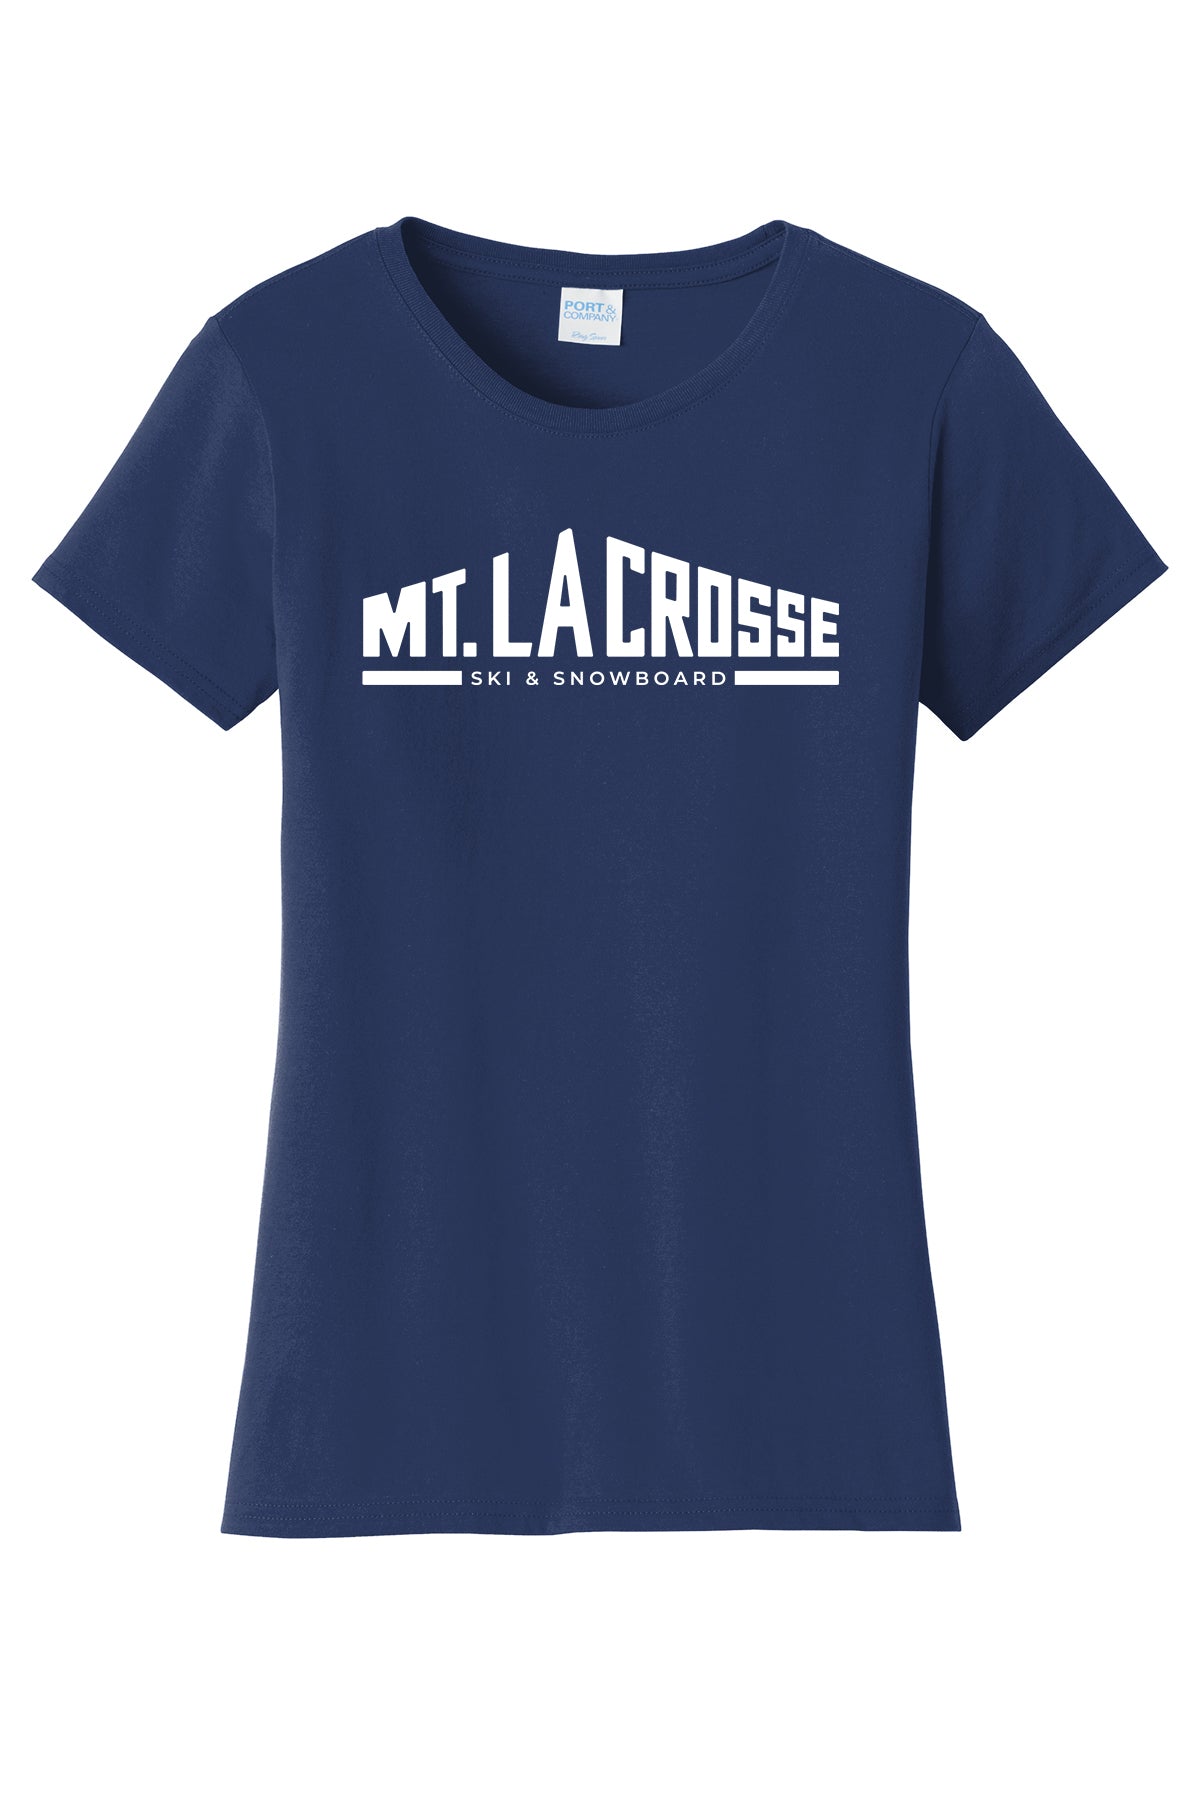 Mt. La Crosse Ladies T-Shirt